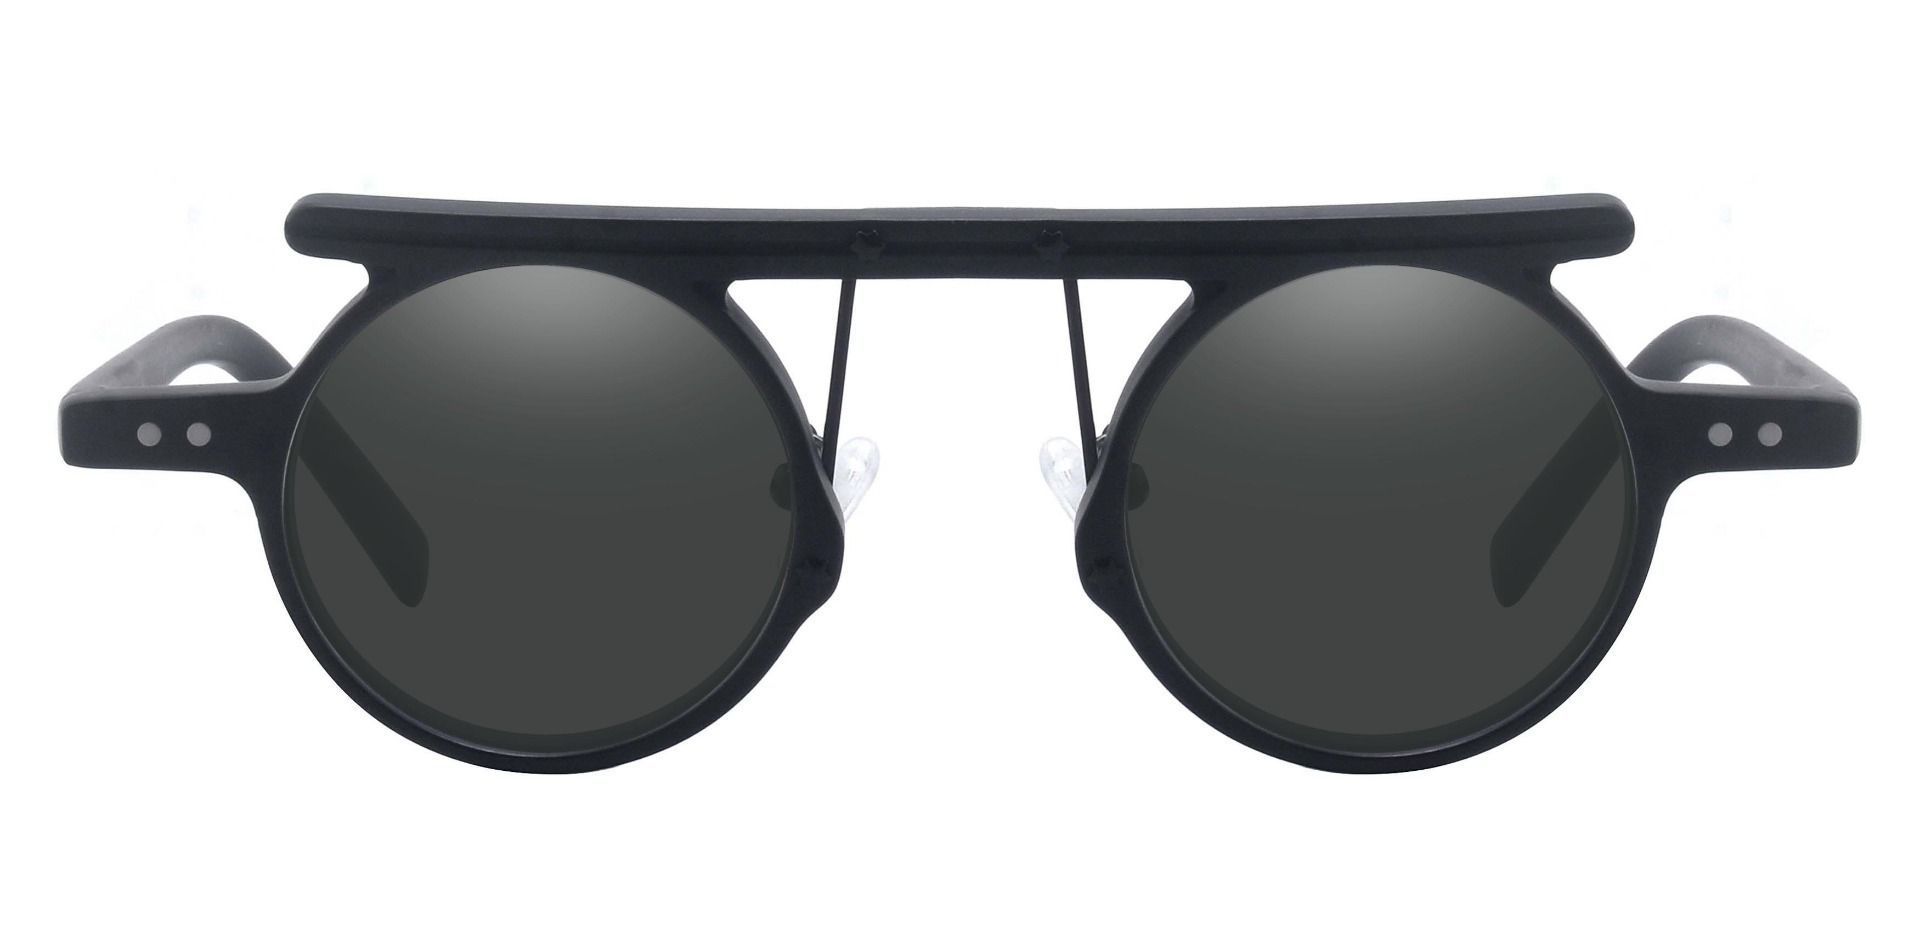 Pagoda Round Prescription Sunglasses - Black Frame With Gray Lenses